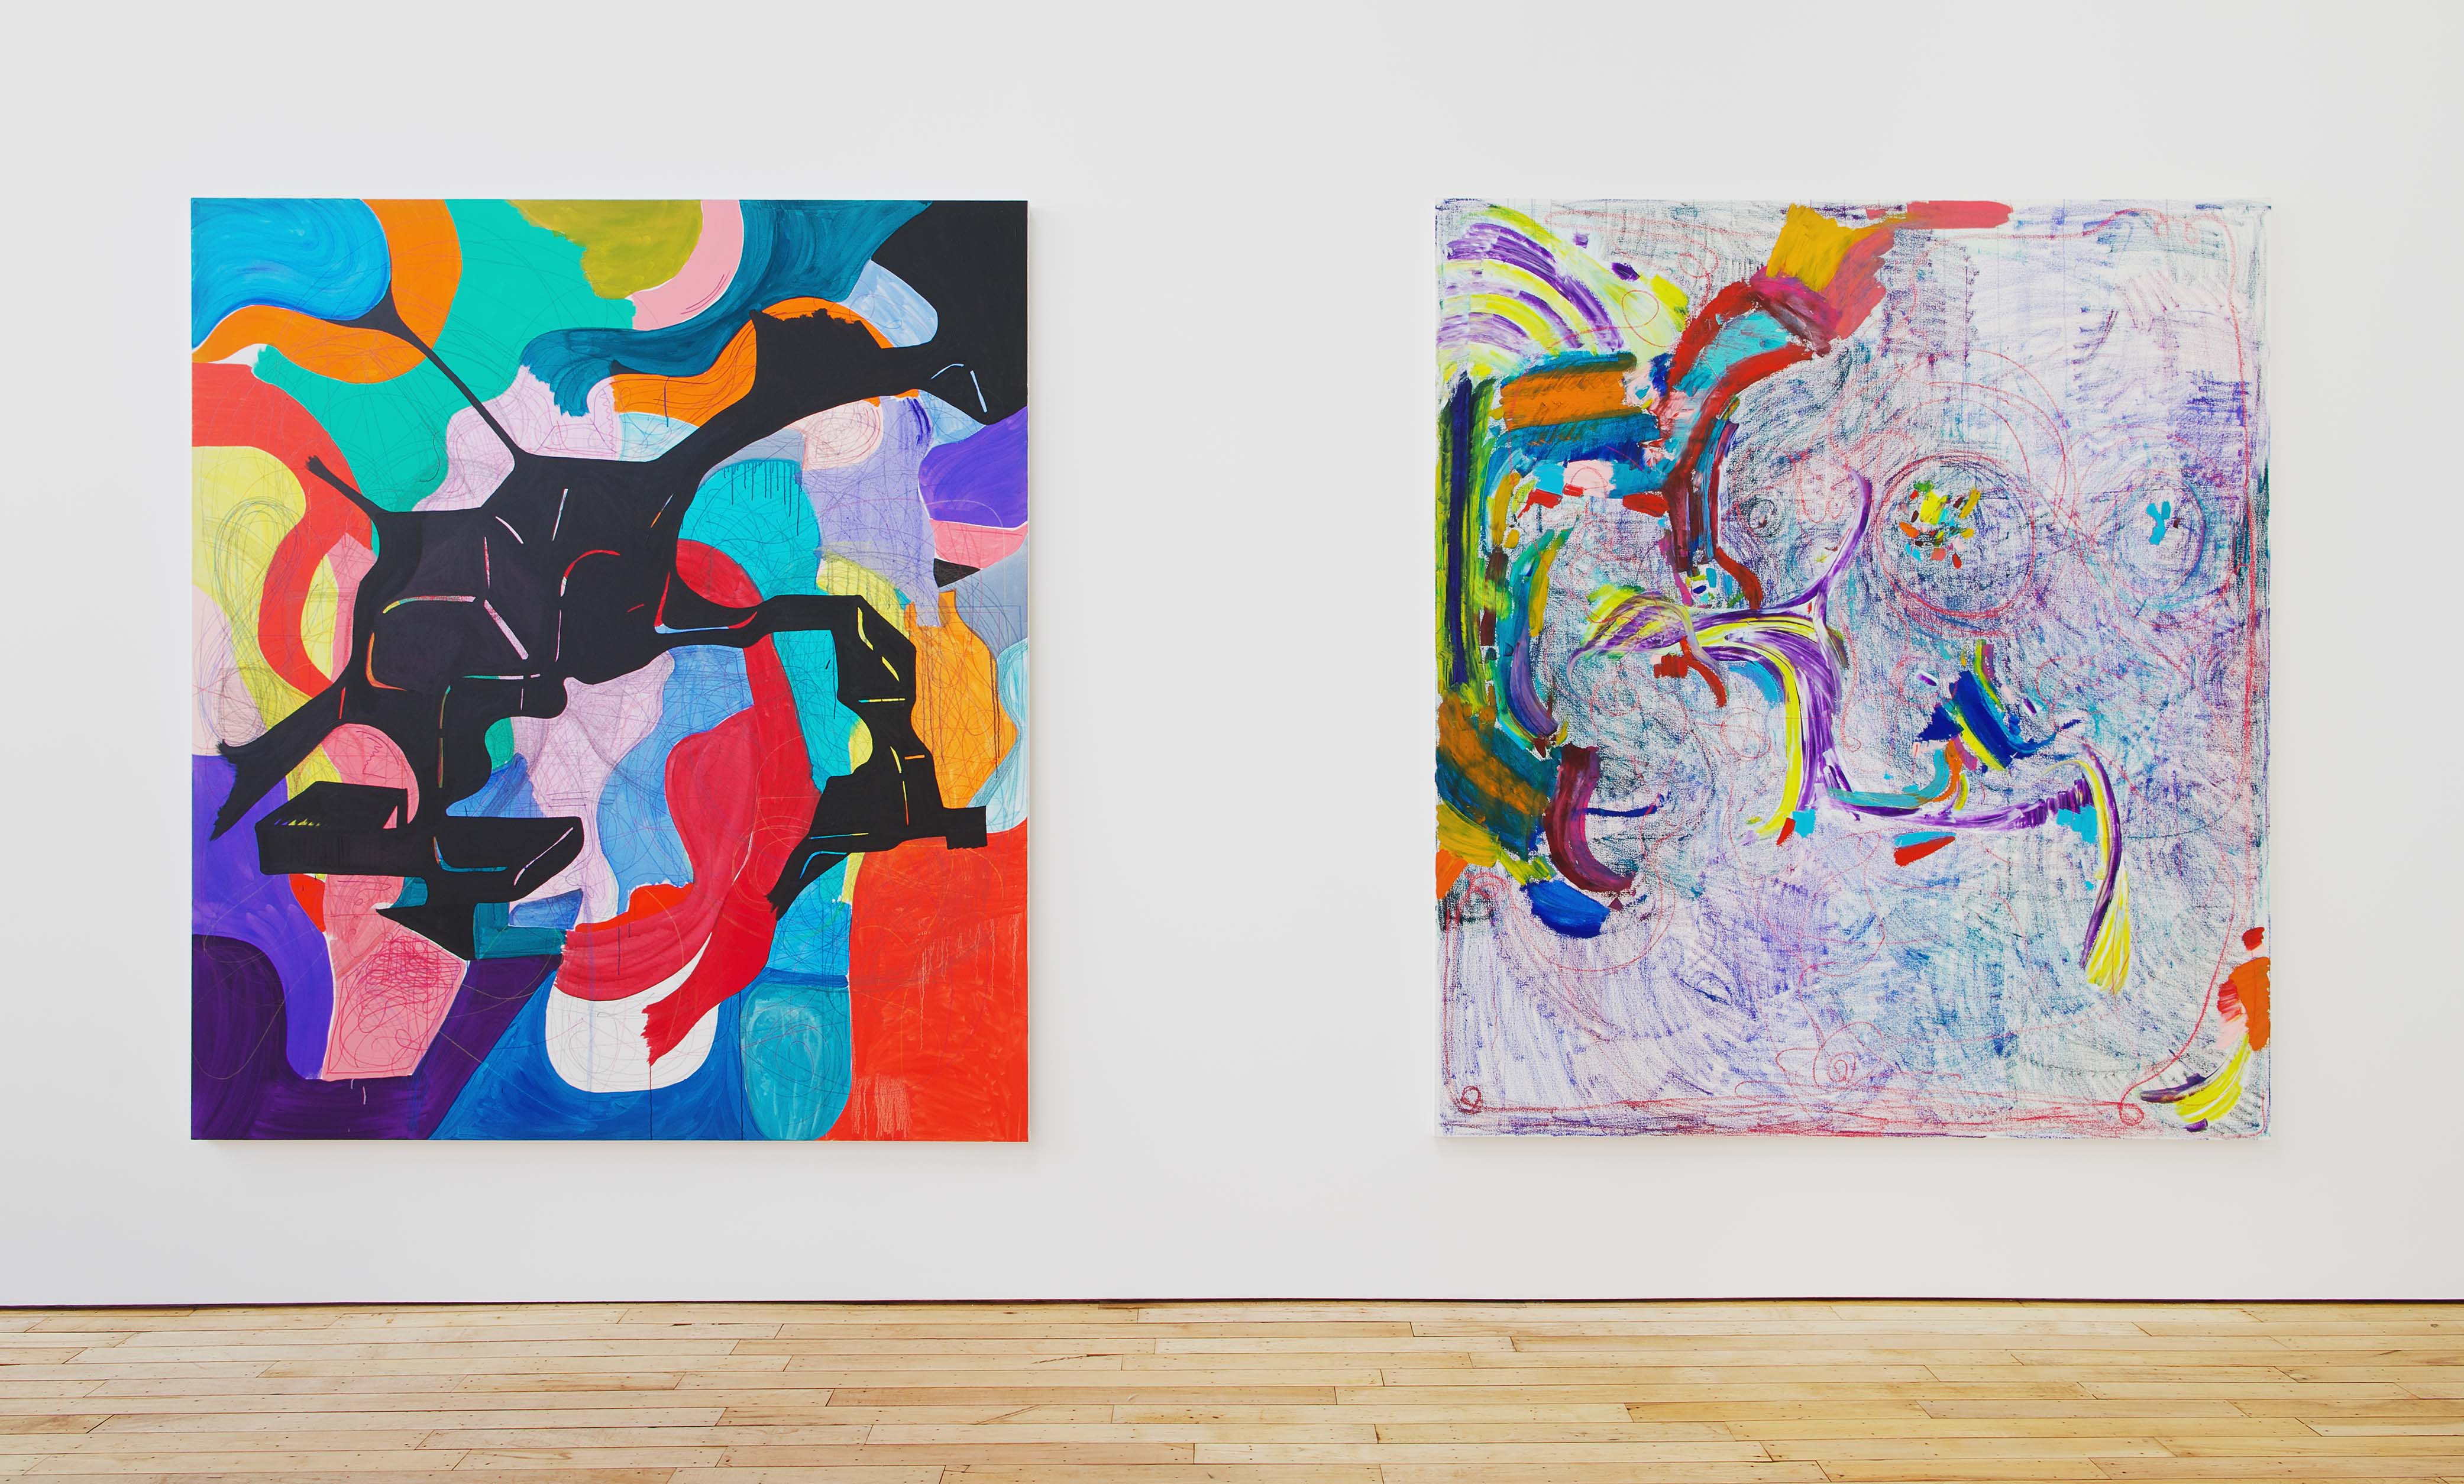 4 - Joanne Greenbaum at Rachel Uffner Gallery New York - 15.04.2014